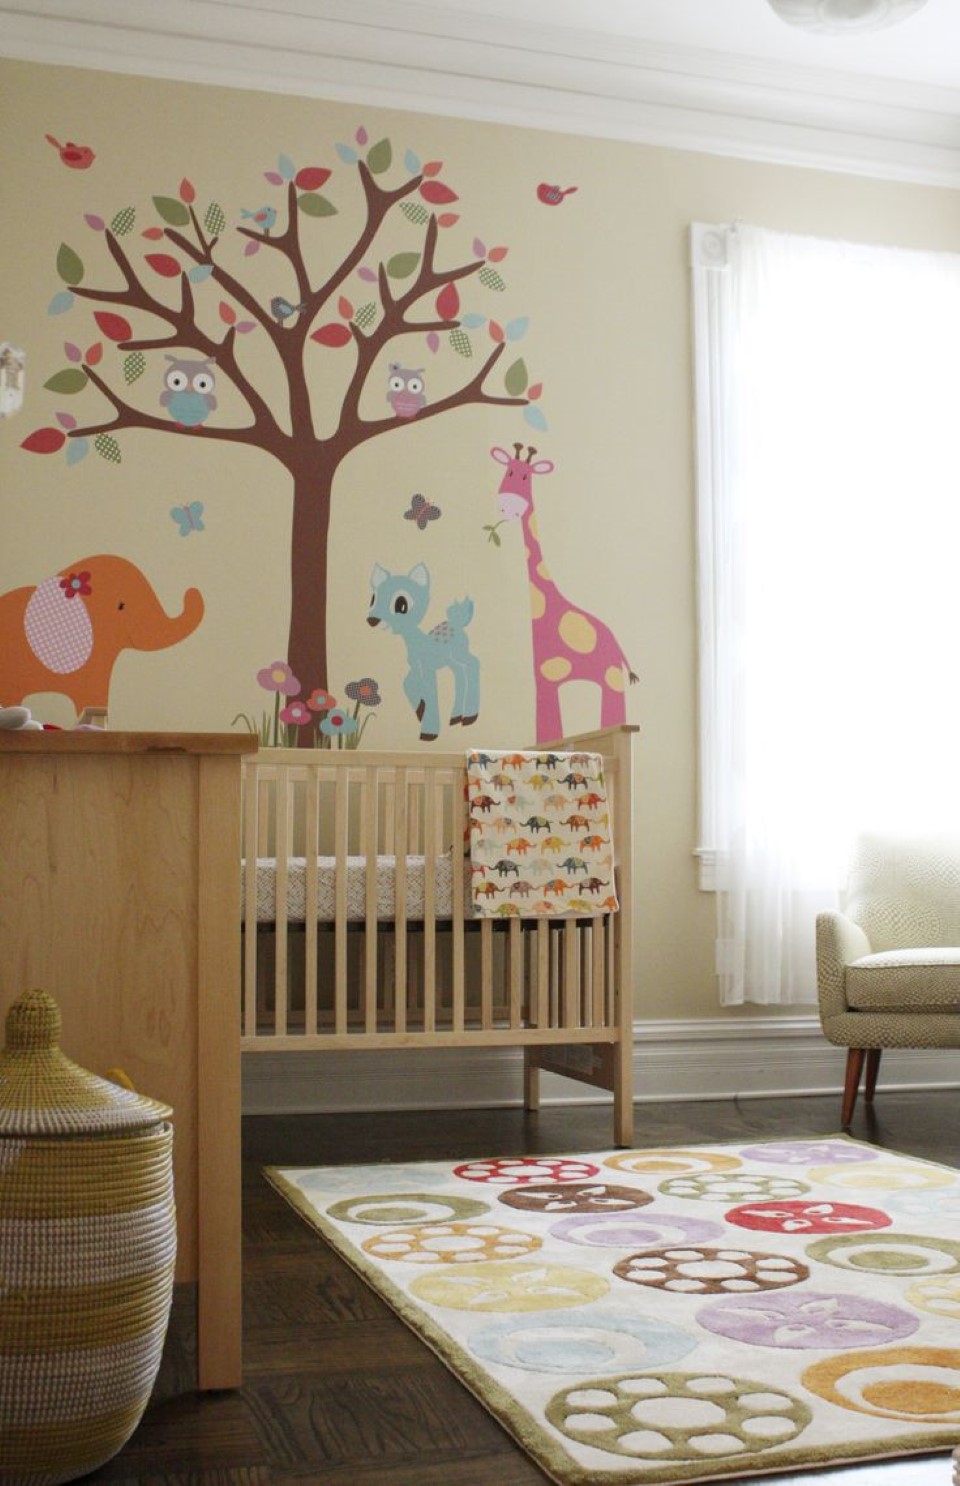 Baby Nursery Modern Best Baby Nursery Furniture Feat Modern Tree And Animal Wall Decal Idea Plus Ball Pattern Area Rug Kids Room Modern And Minimalist Baby Nursery Furniture Ideas